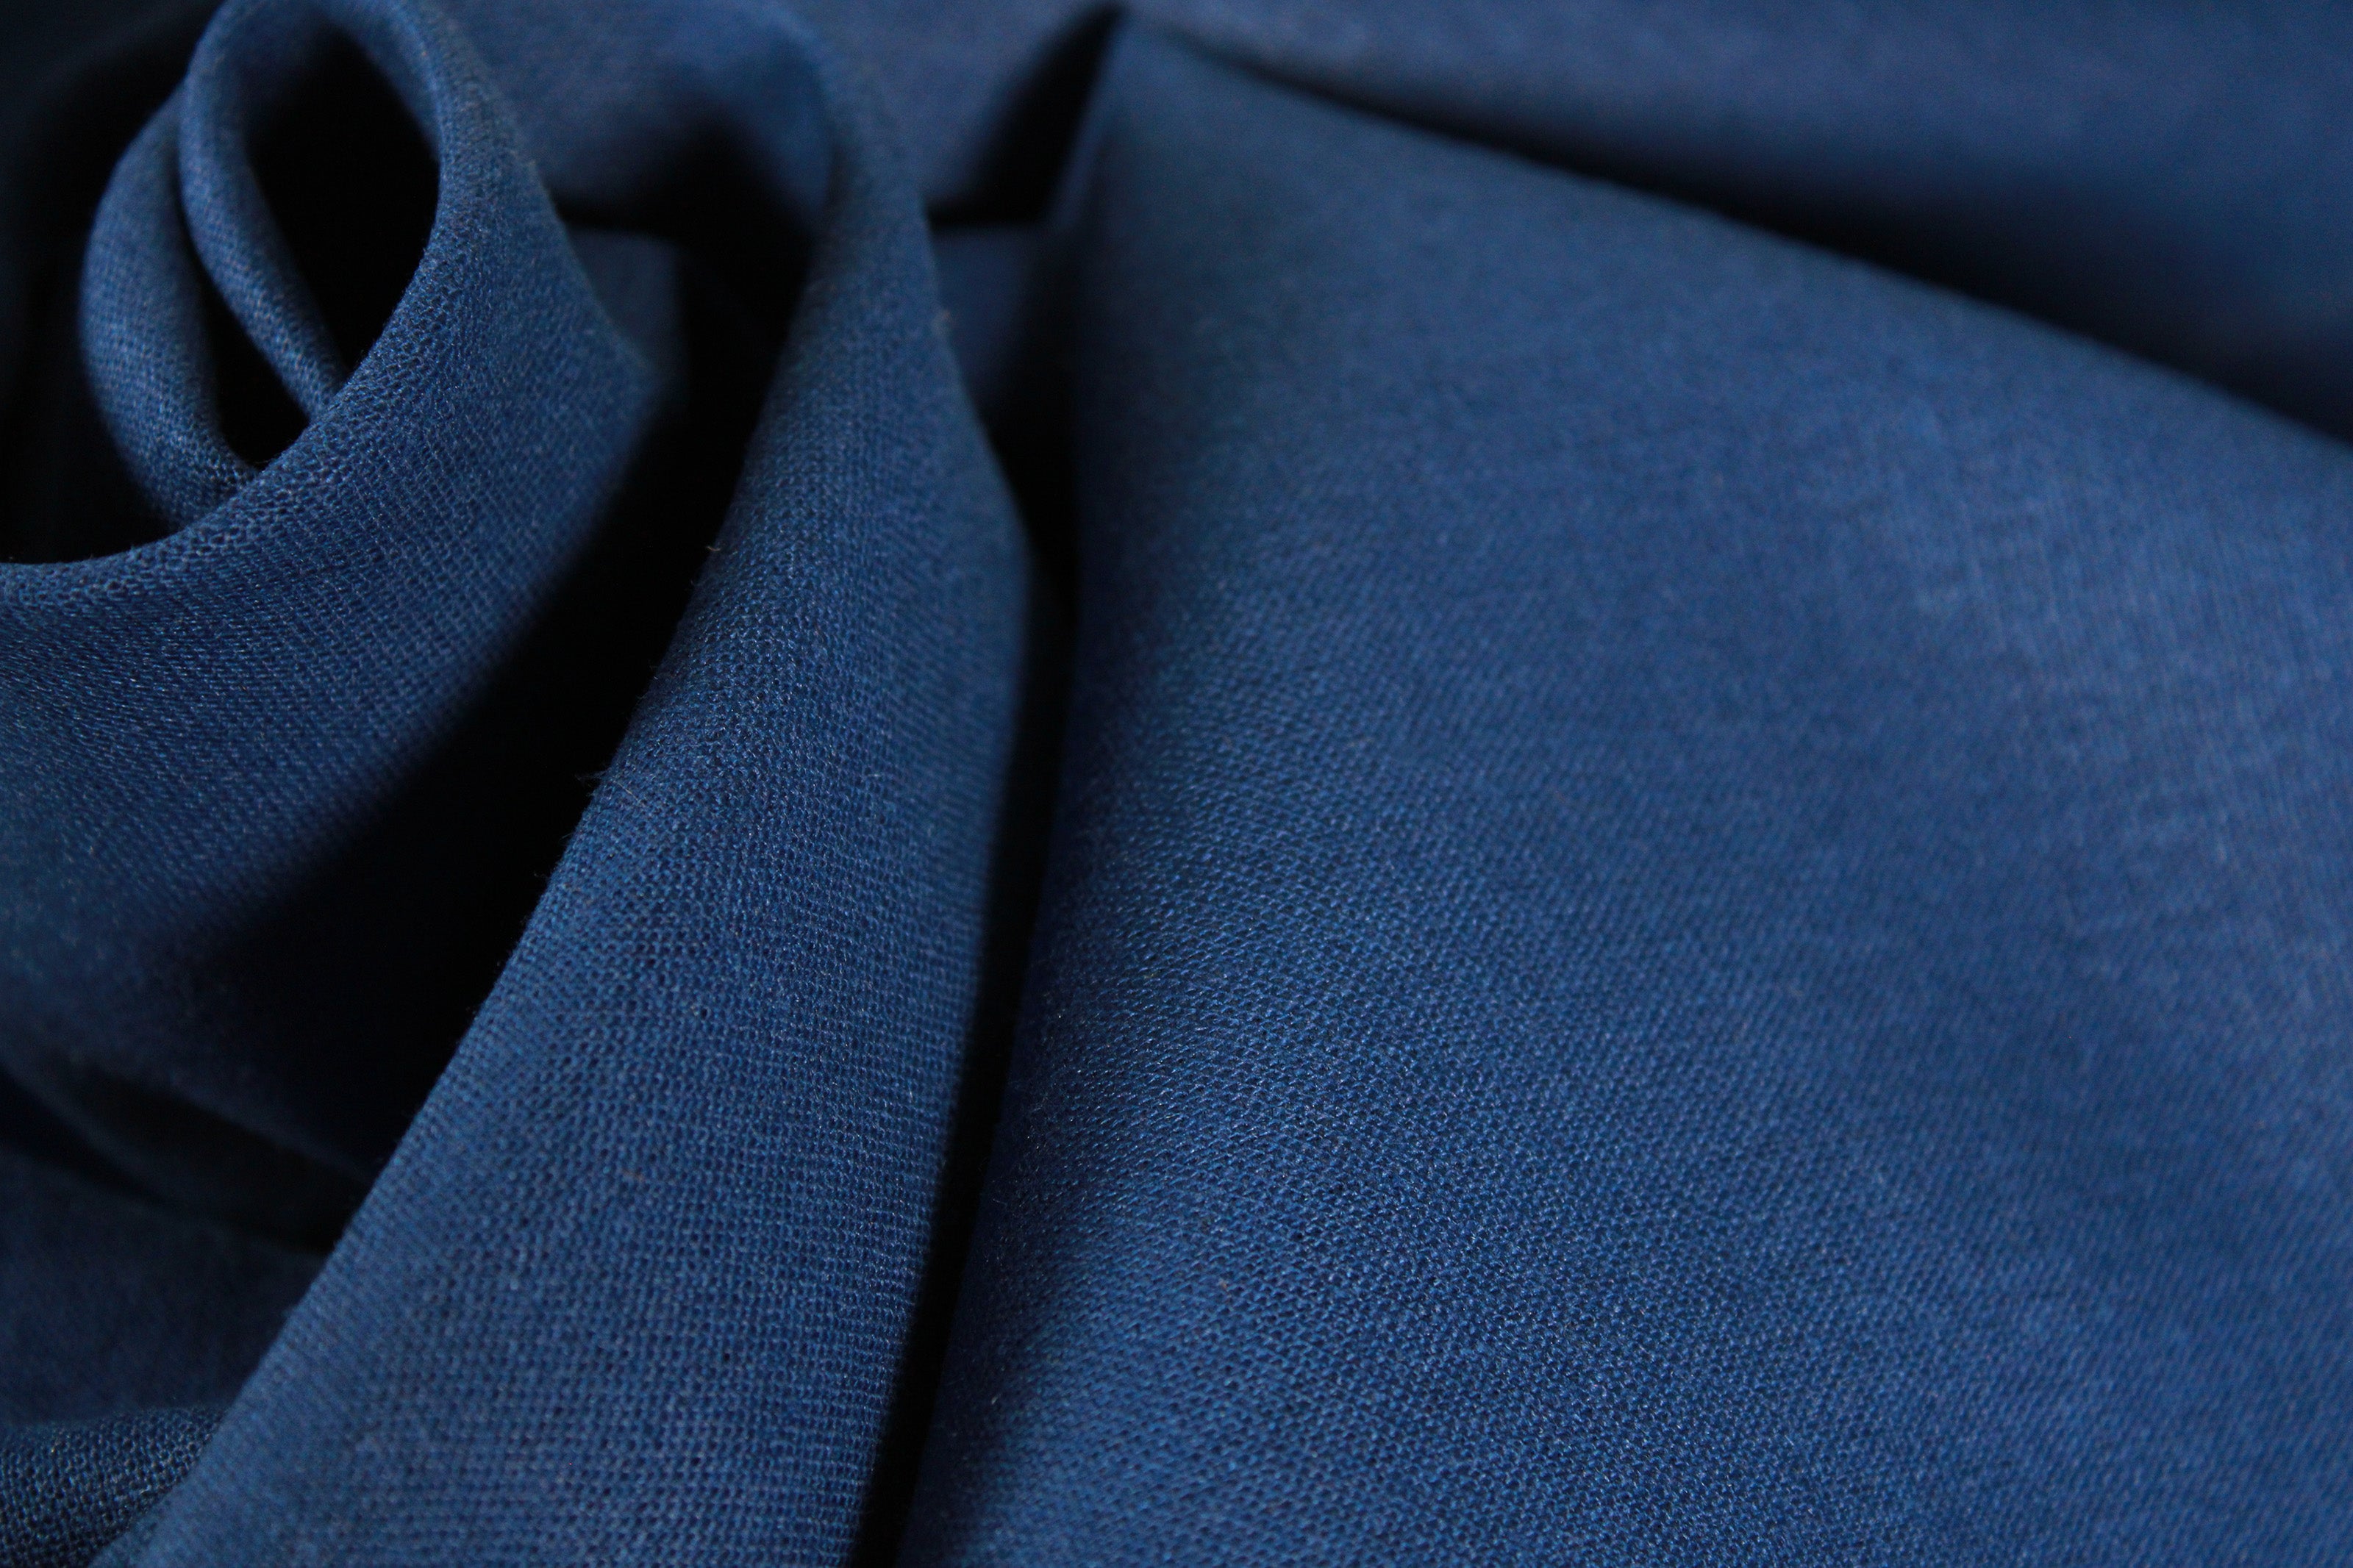 WHOLESALE 100% linen fabric / Linen Fabric ROLL Wholesale / Linen by the Bolt / Bellwether blue linen fabric